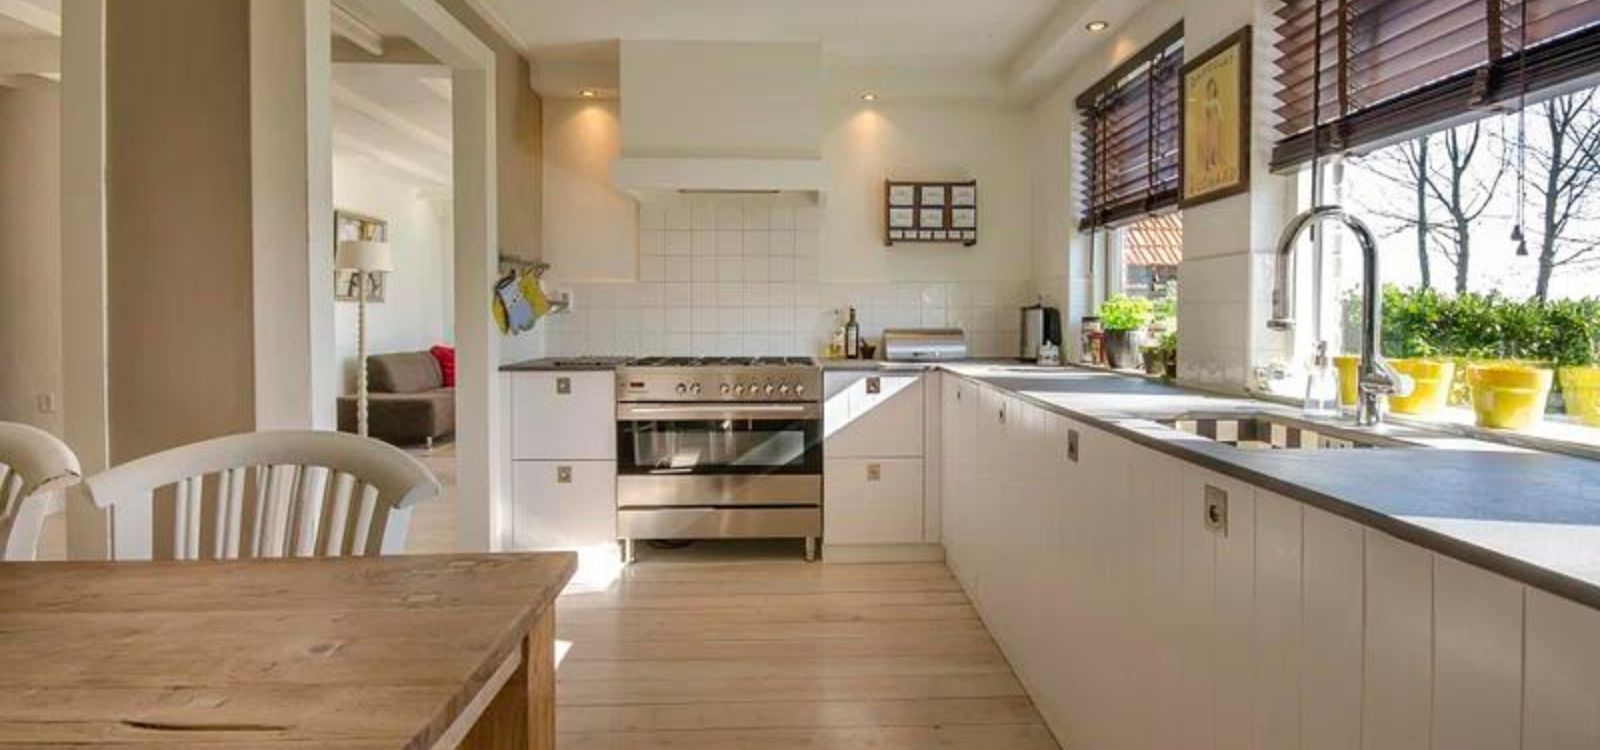 10 Minimalist Kitchen Designs to Inspire You to Simplify